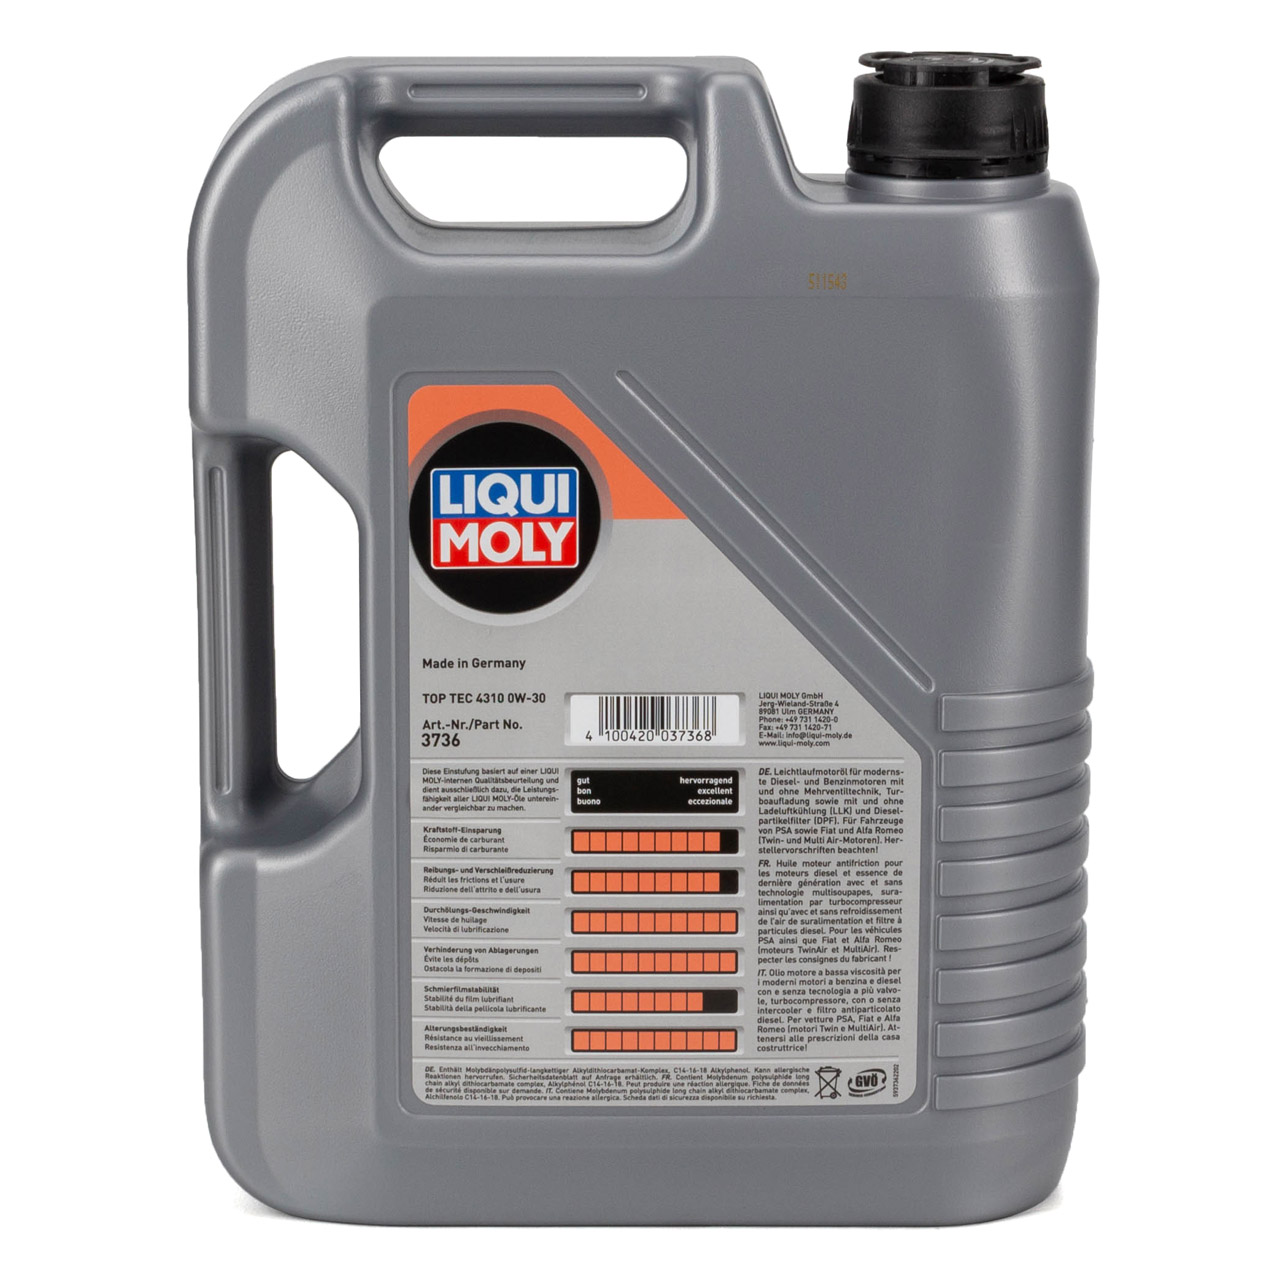 5L 5 Liter LIQUI MOLY TOP TEC 4310 0W-30 Motoröl Öl PSA B71 2312 FIAT 9.55535-DS1/-GS1